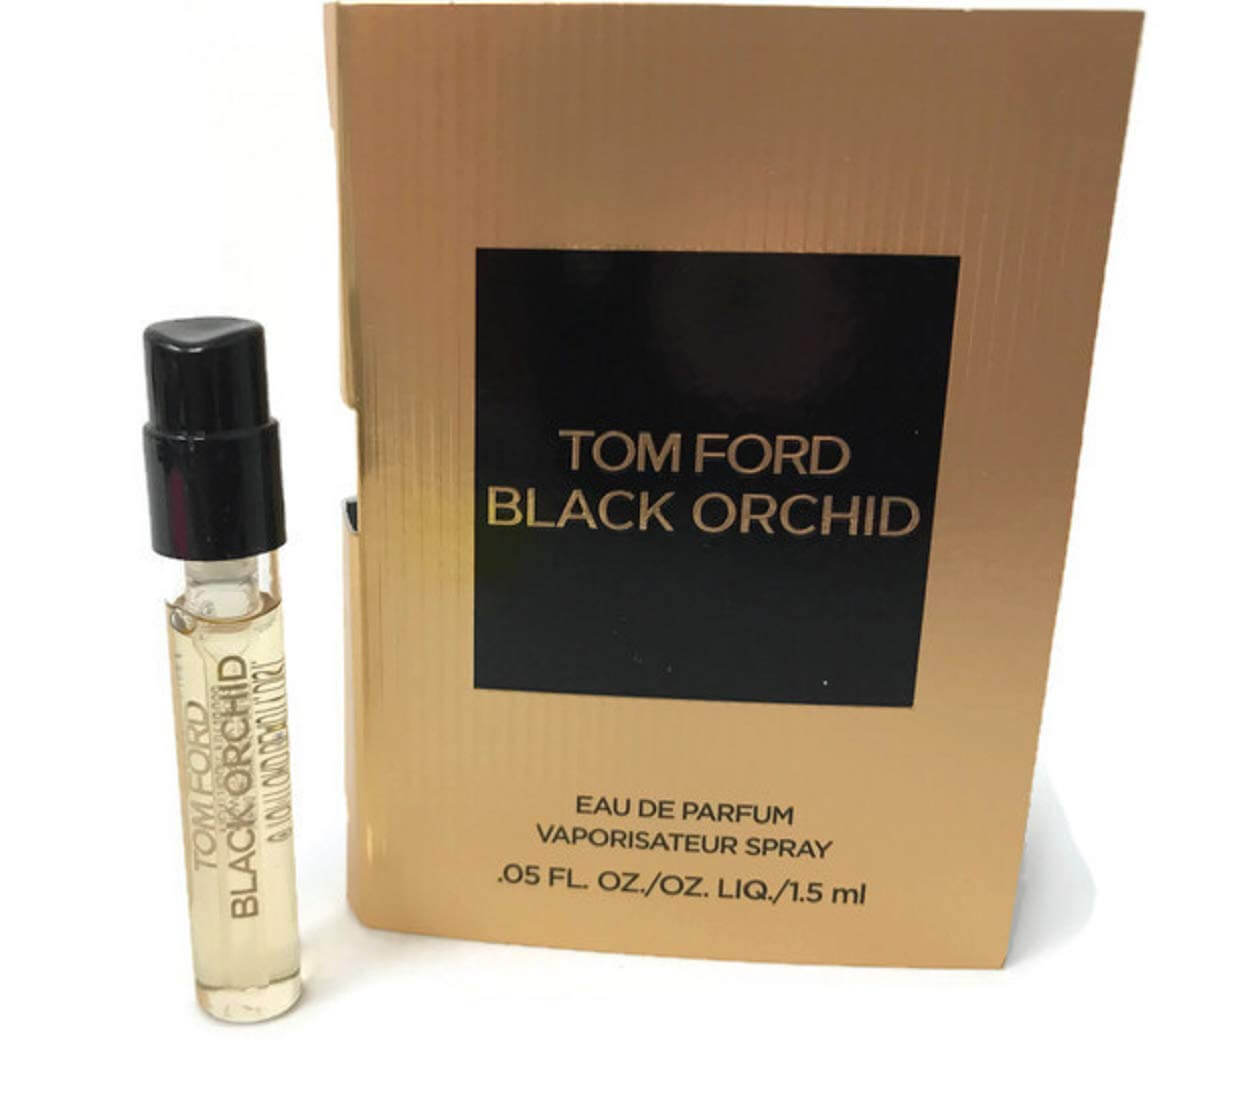 FREE Tom Ford Black Orchid Parfum Samples - Free Samples & Freebies ...